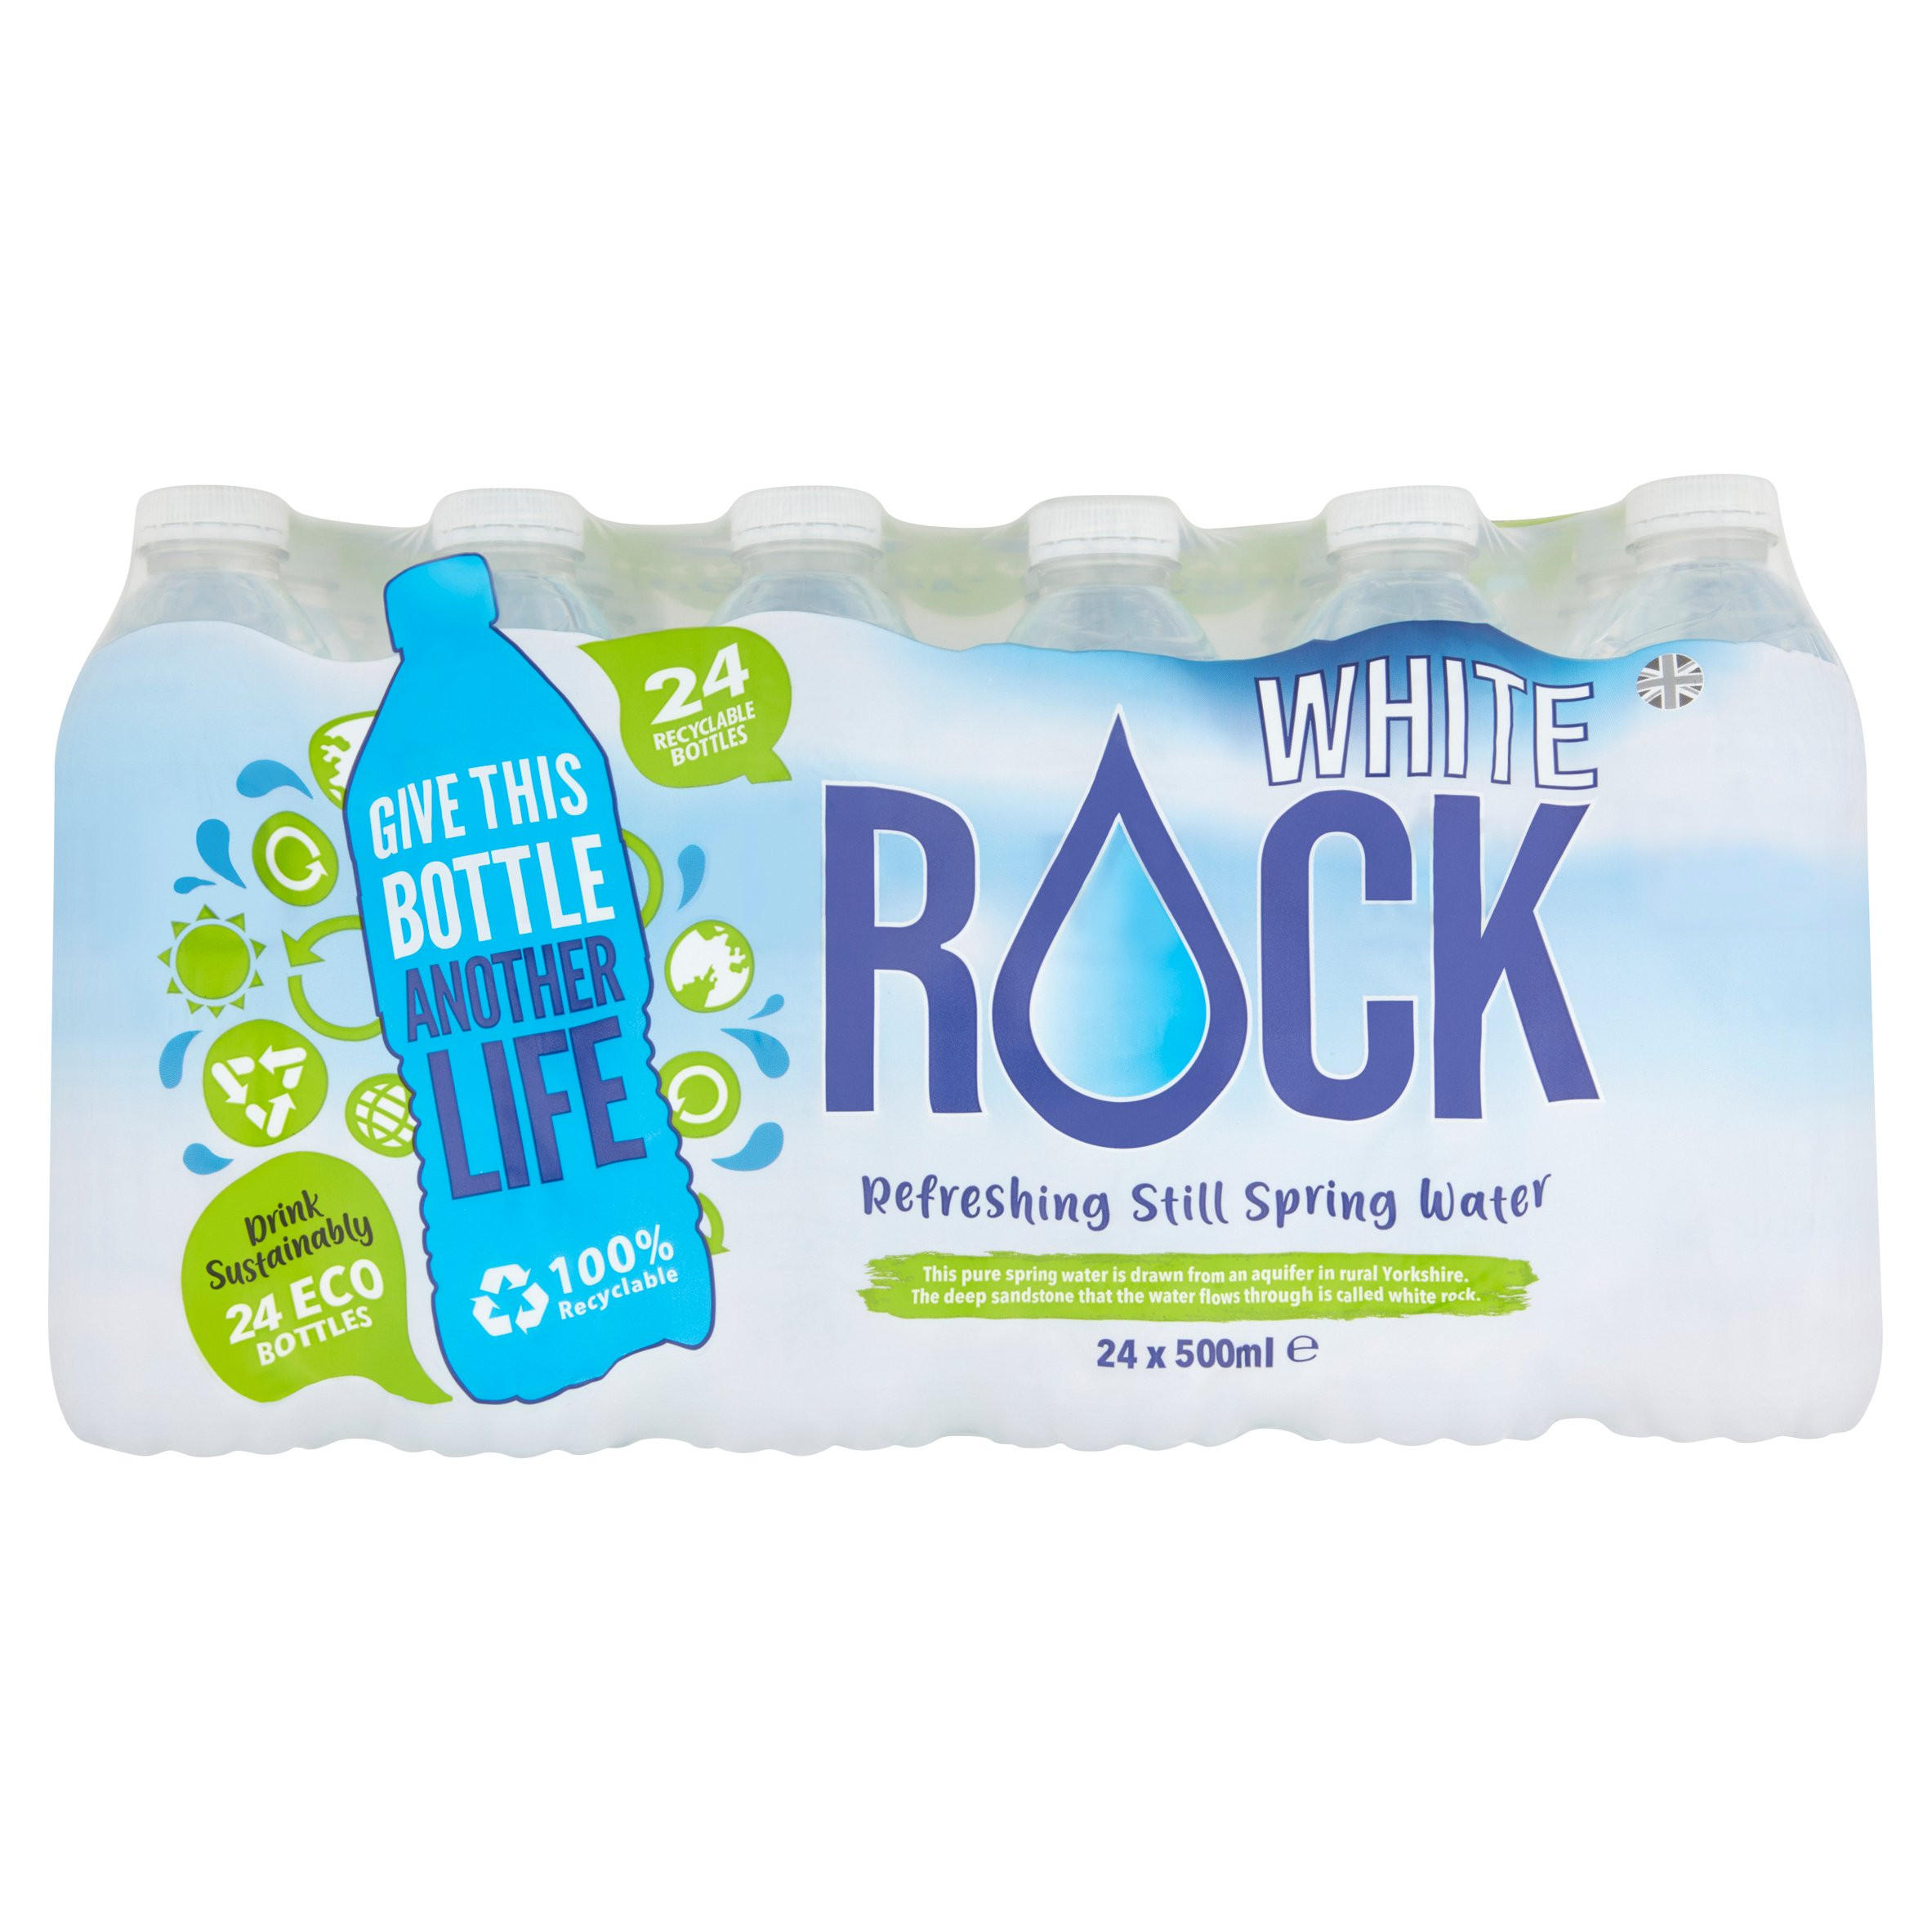 WHITE ROCK Refreshing Still Spring Water 24 x 500ml